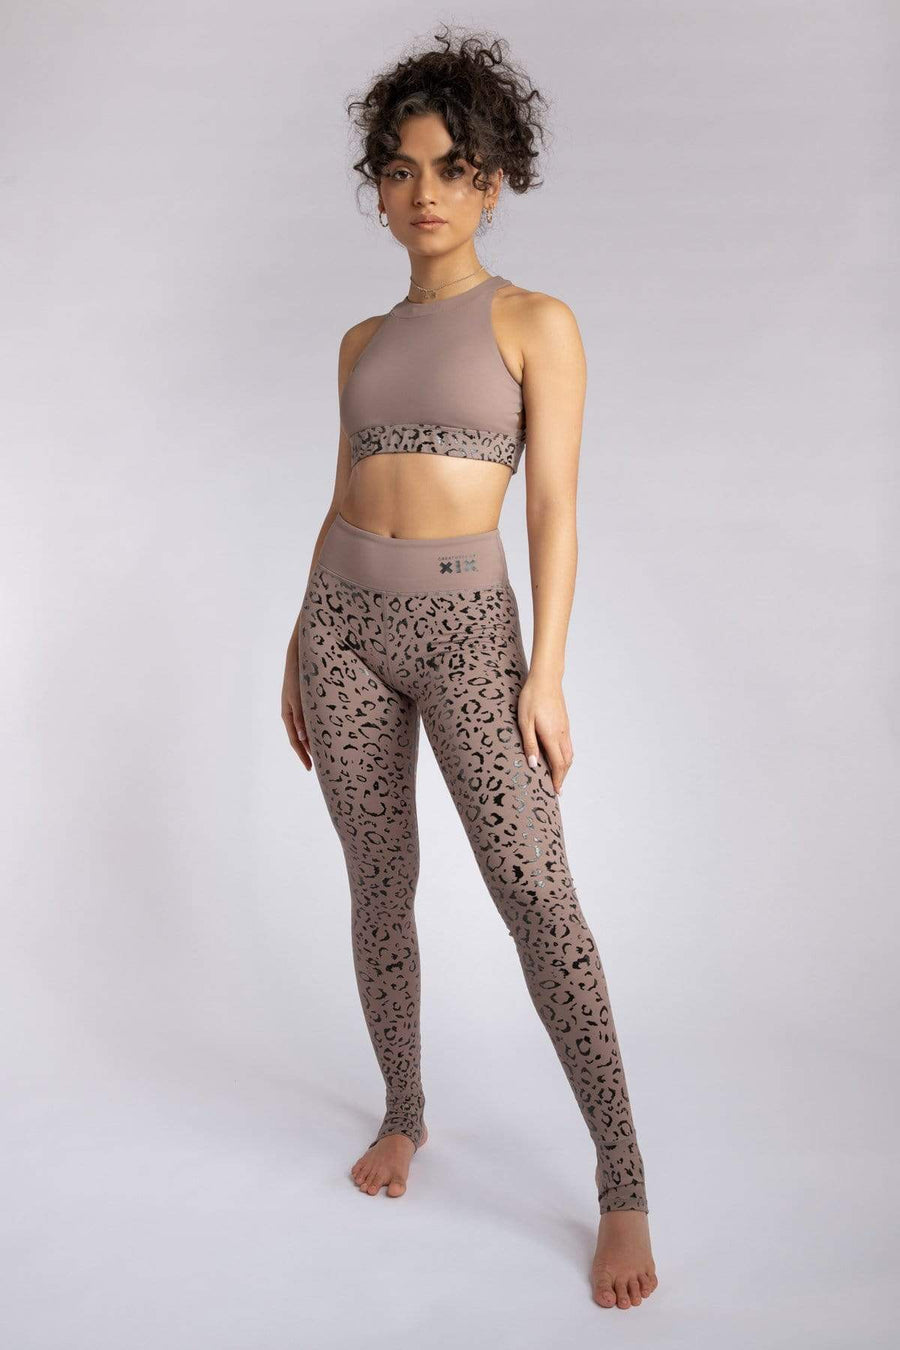 Gecko Grip™ Leggings: Dusky Leopard leggings